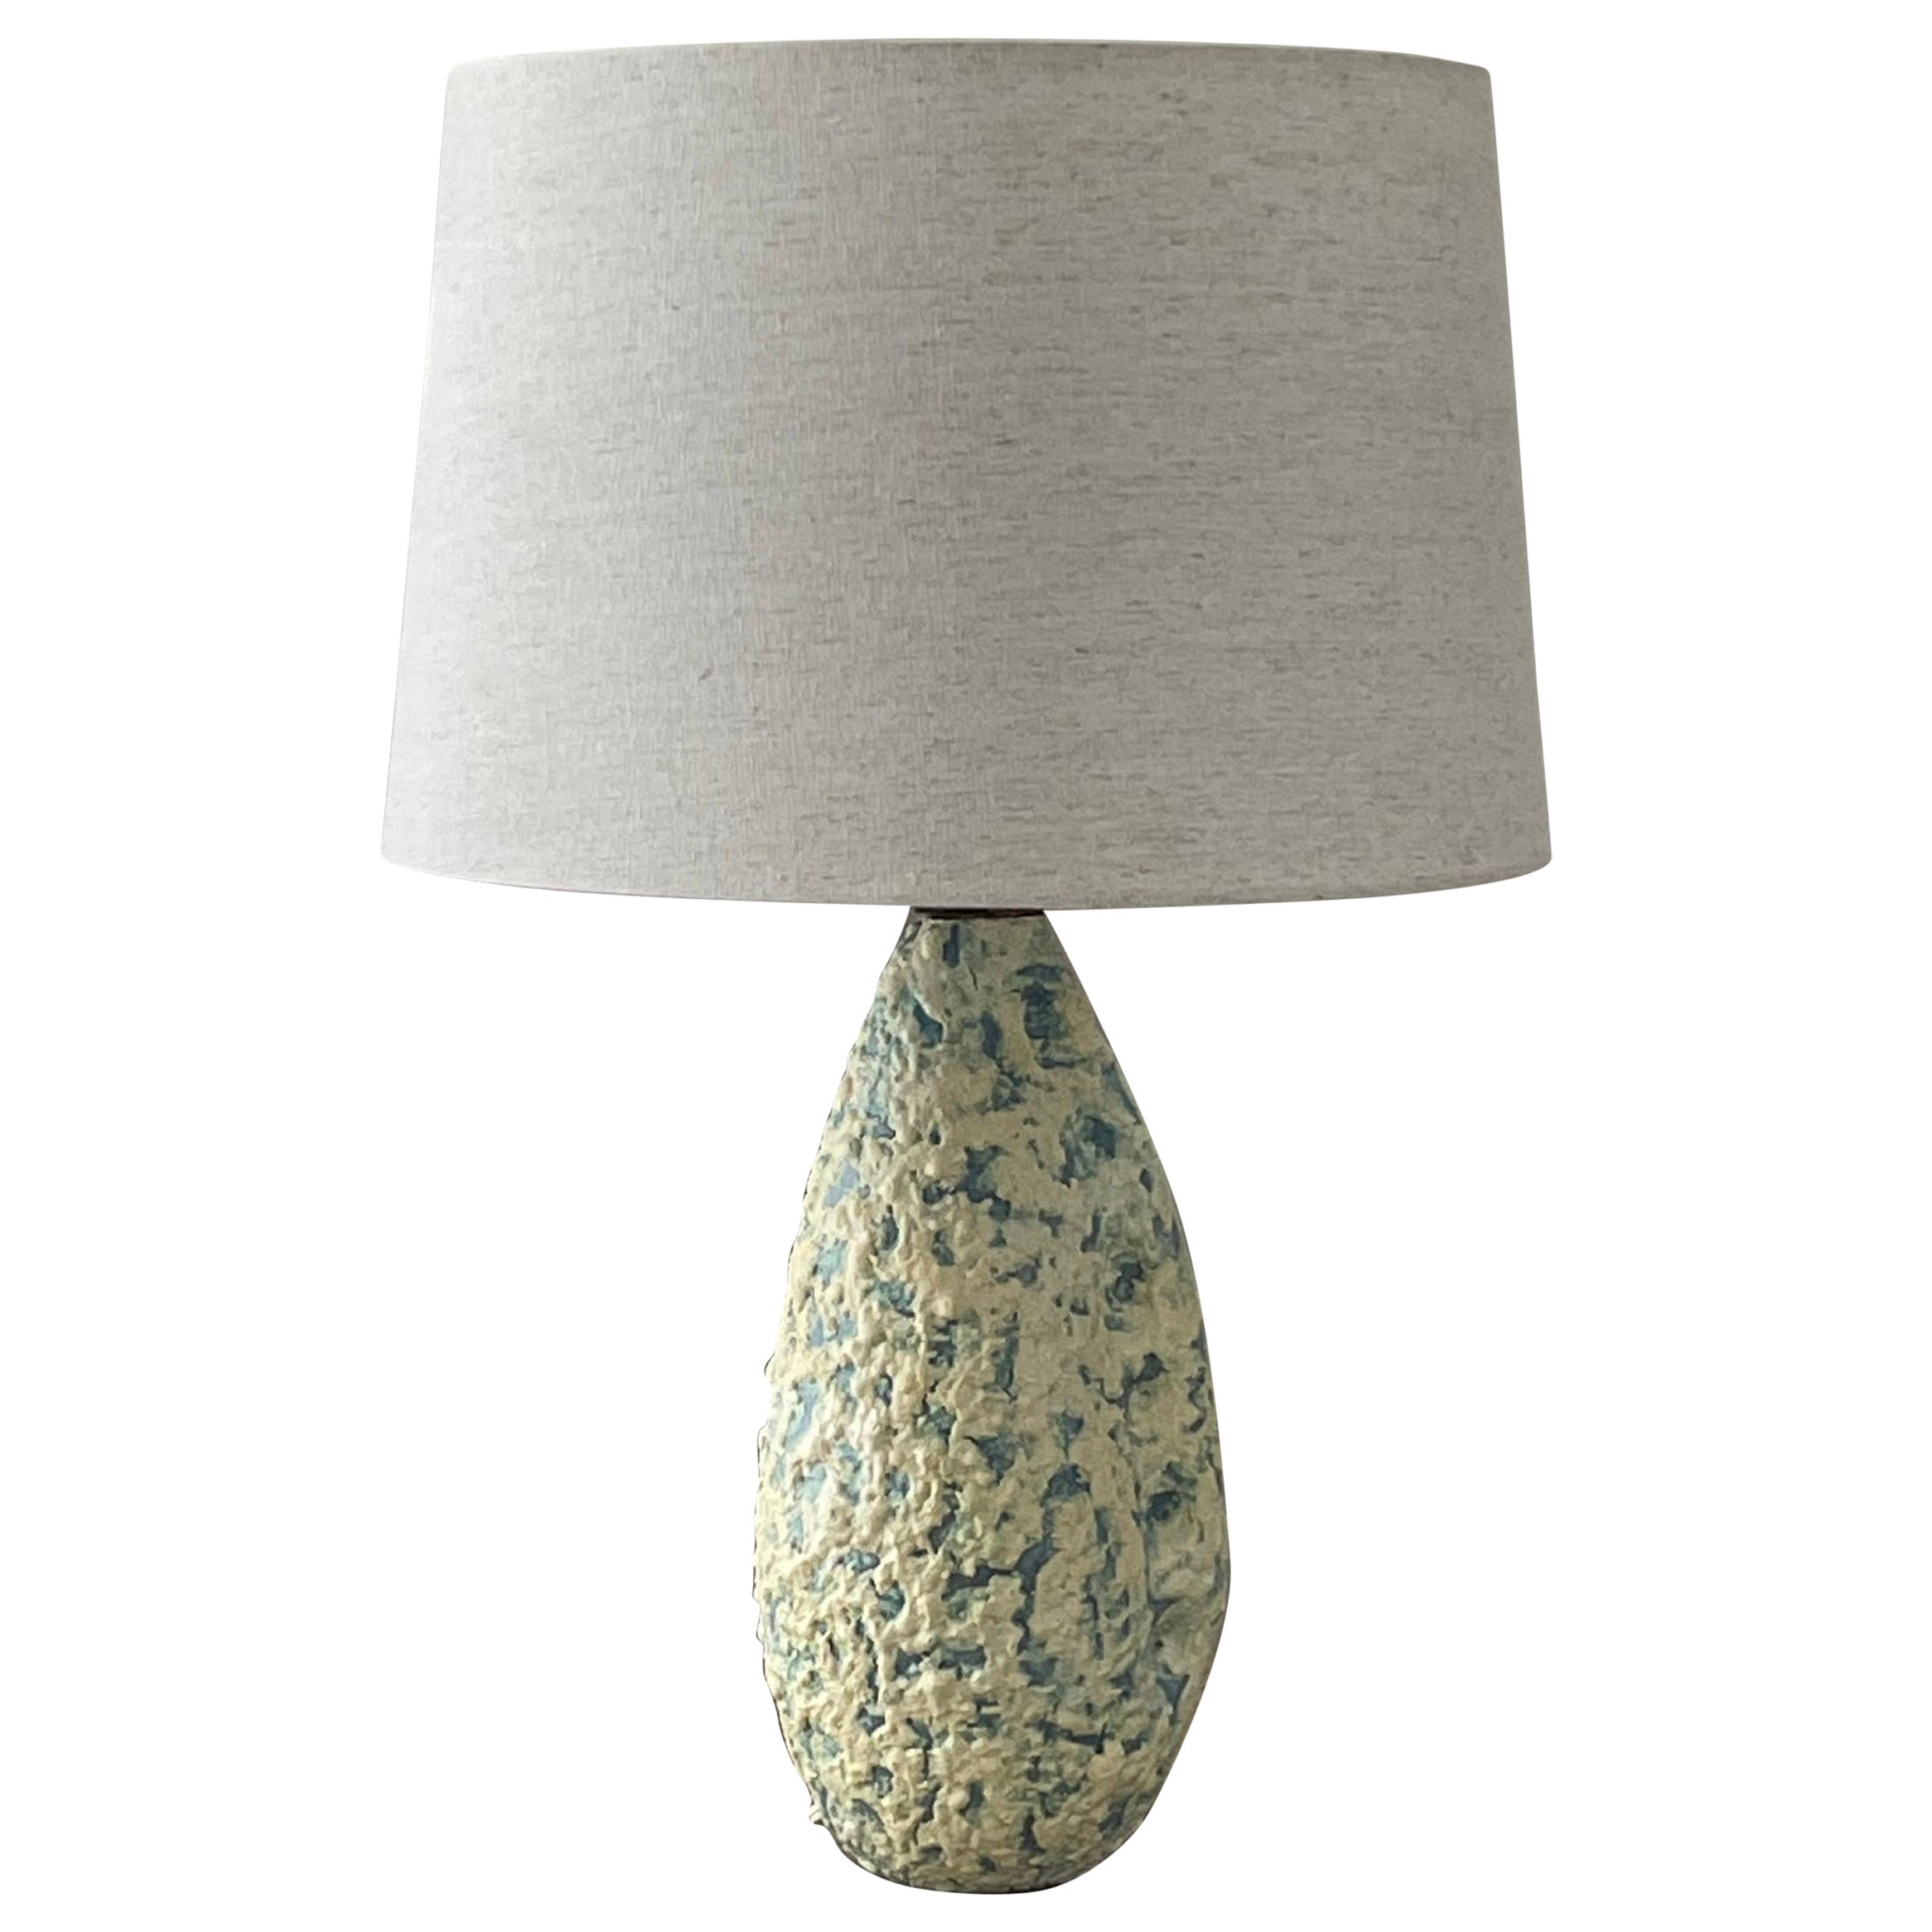 Marcello Fantoni Organic Shaped Ceramic Lamp with Heavy Texture Lava Glaze